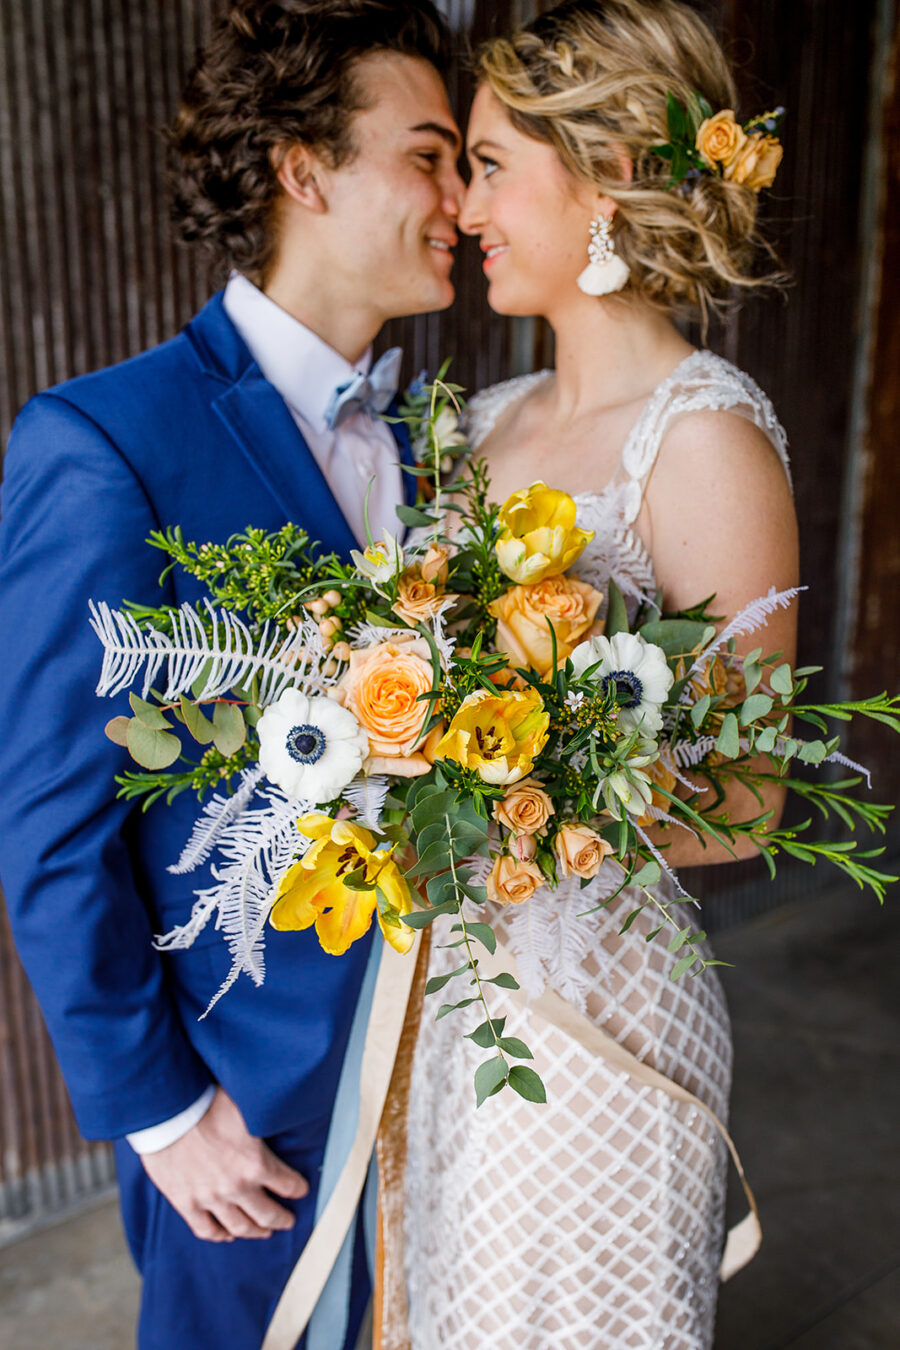 Courtney Davidson Wedding Photography featured on Nashville Bride Guide